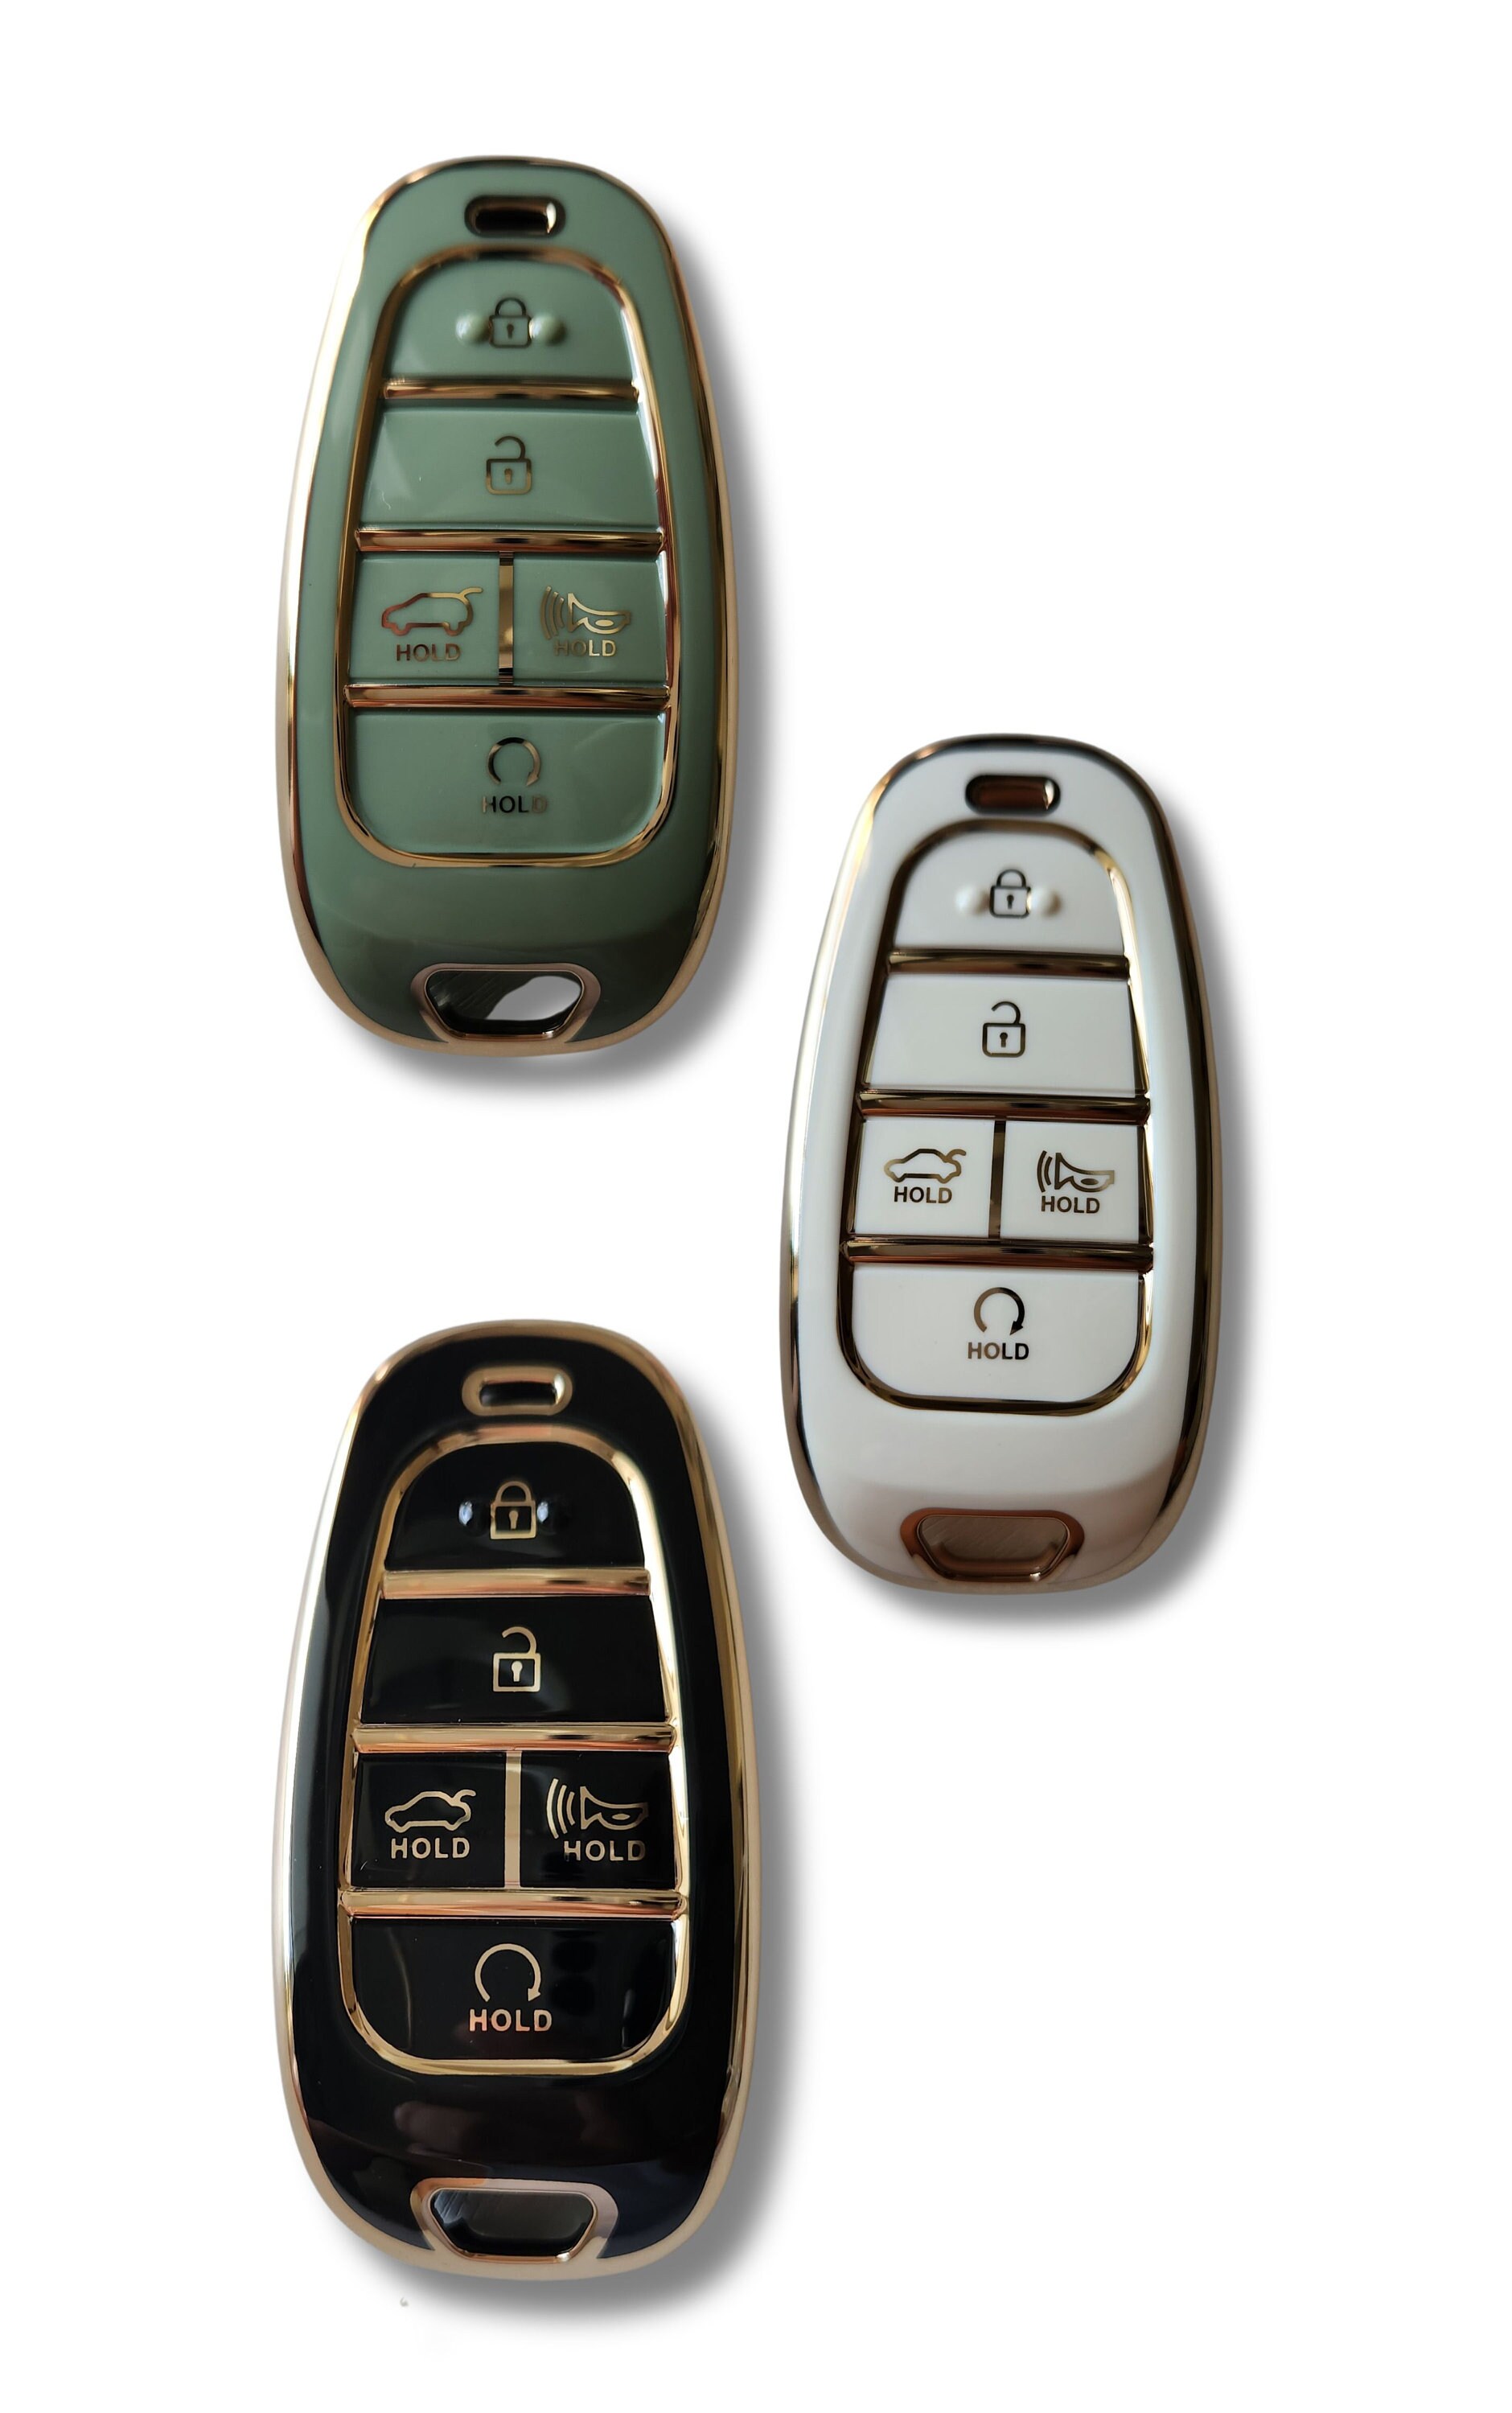 Kaufe TPU Auto Flip Key Case Cover Tasche Halter für Hyundai Sonata Tucson  Elantra Verna Solaris Ix35 IX45 IX25 I10 I20 I30